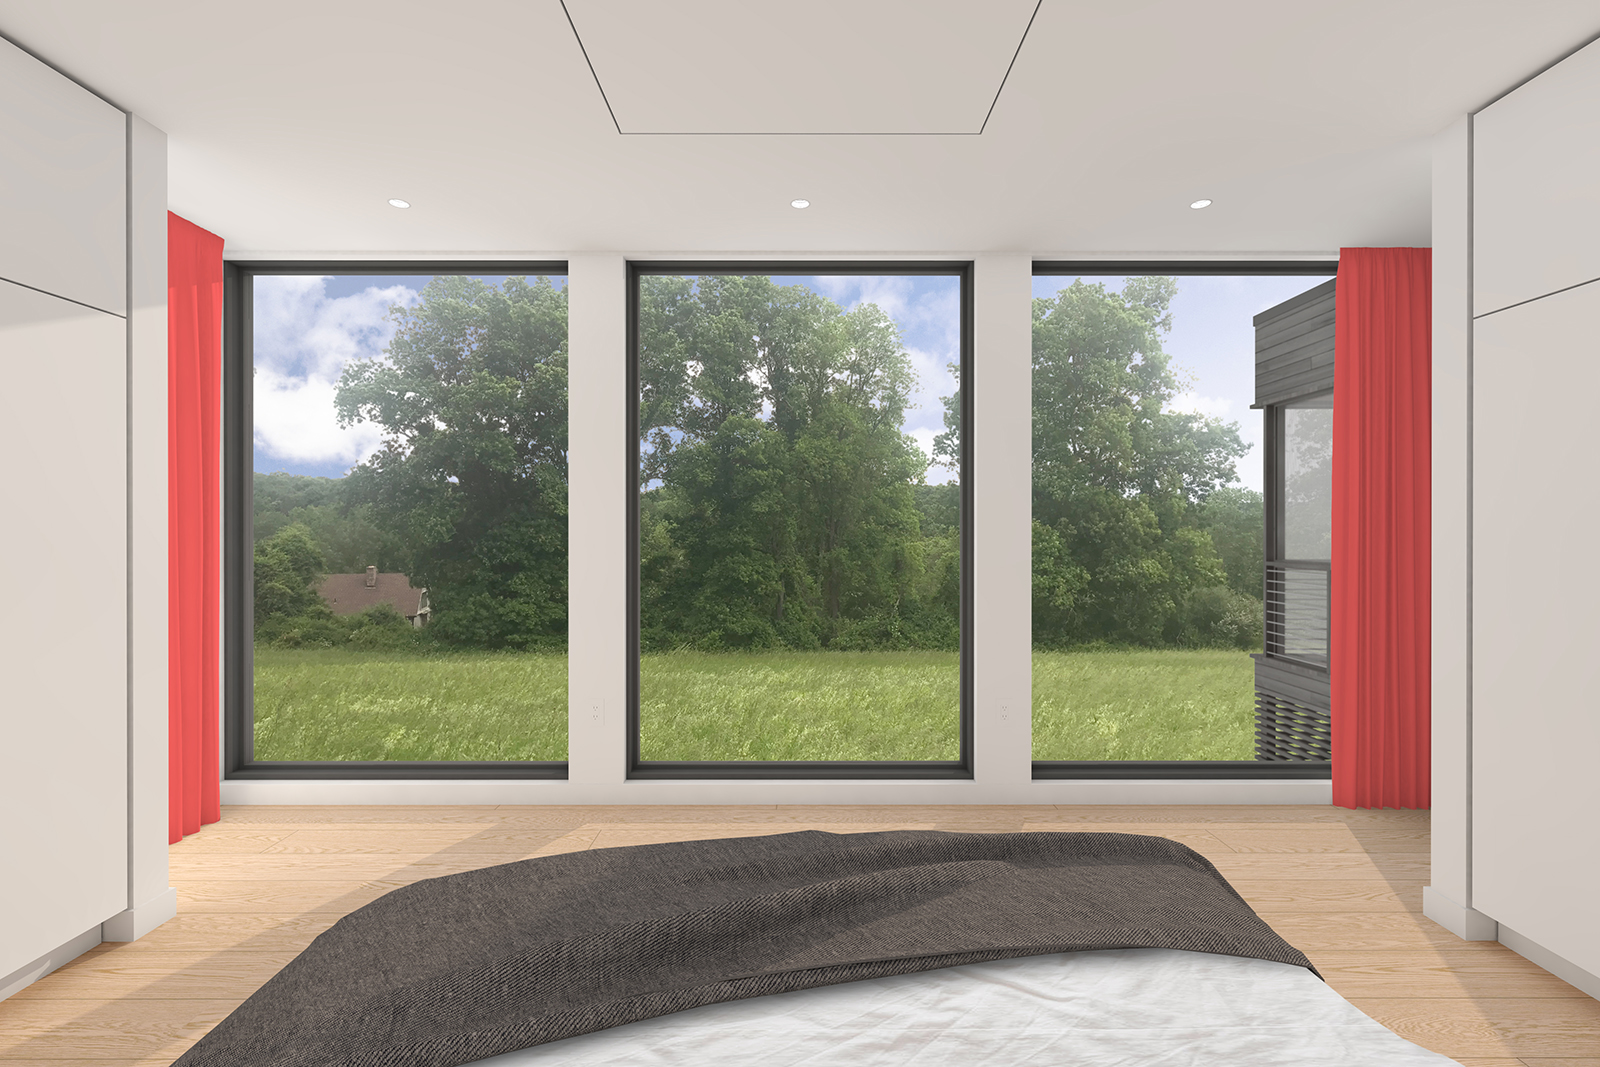 res4-resolution-4-architecture-modern-modular-prefab-sharon-ridge-residence-rendering-interior-perspective-master bedroom.jpg